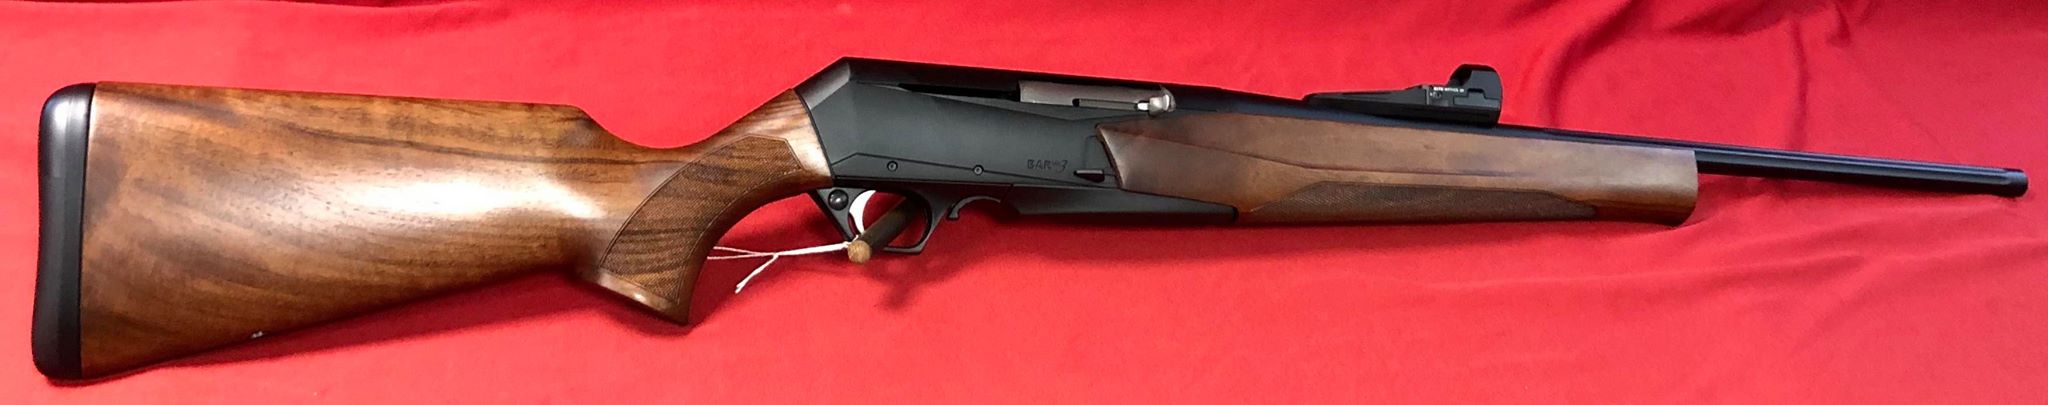 Browning Bar MK3 en calibre 300win + nouveau montage browning avec point rouge Kite